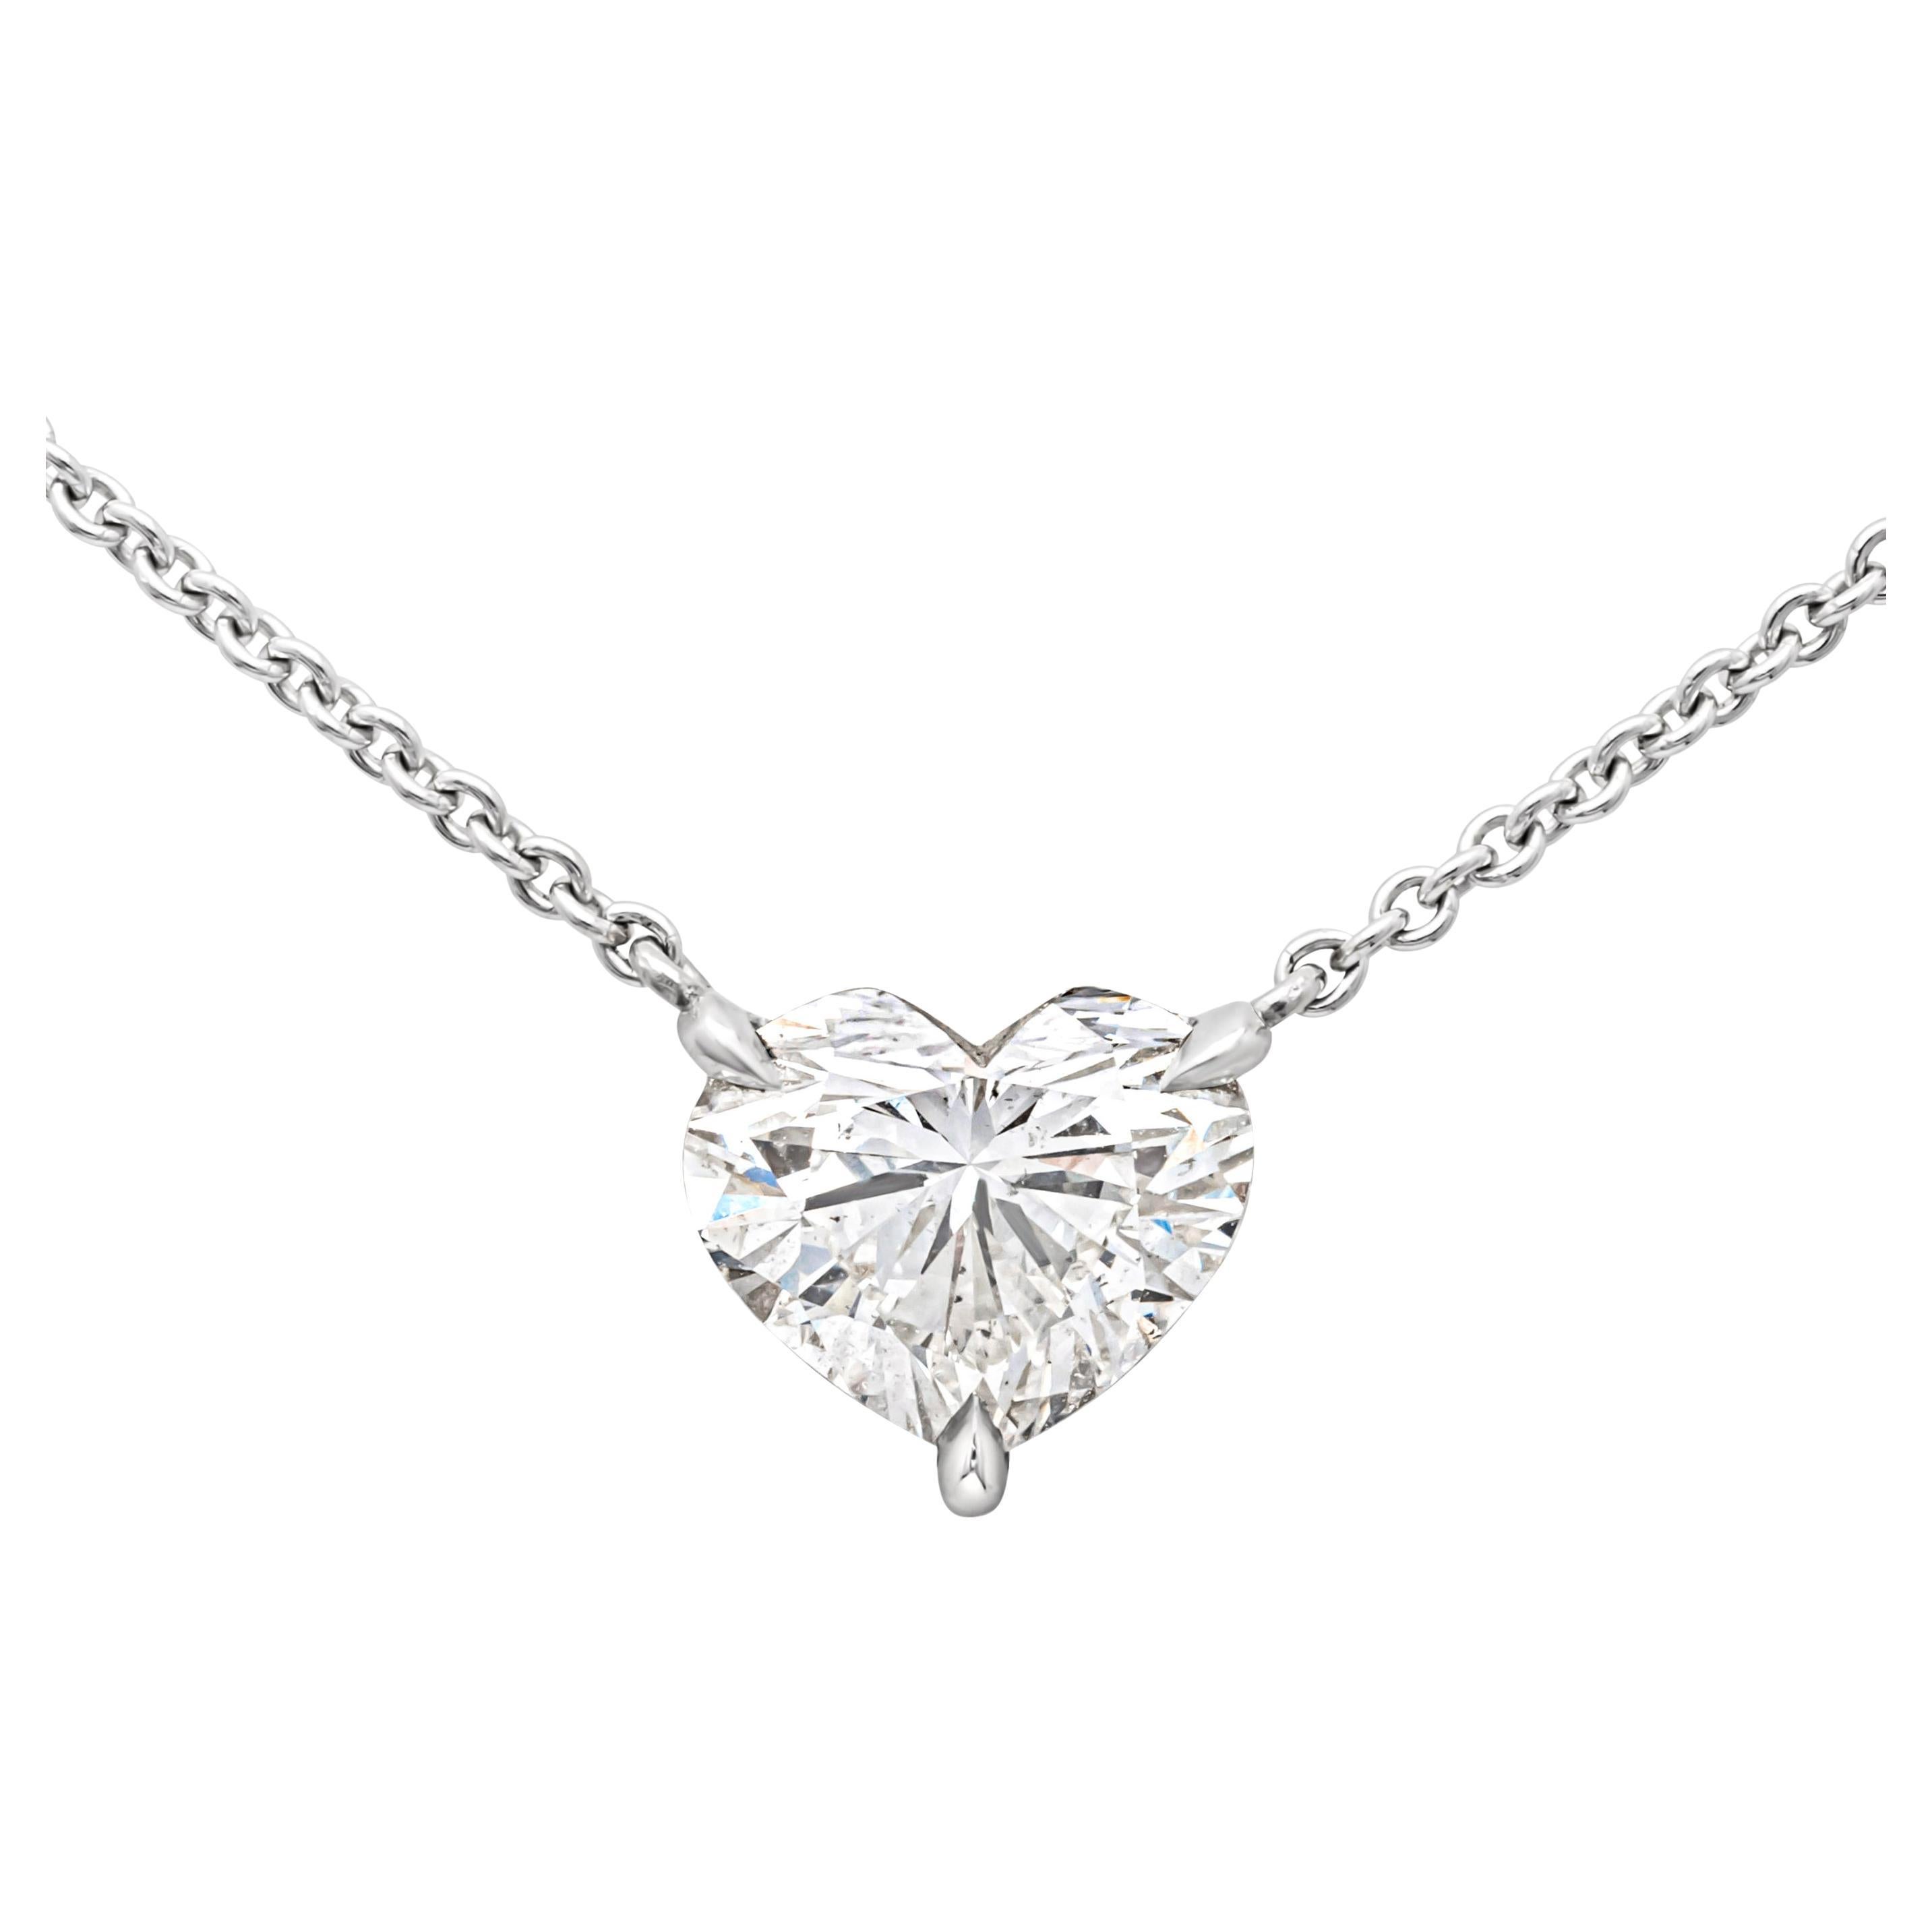 GIA Certified 1.18 Carats Heart Shape Diamond Solitaire Pendant Necklace